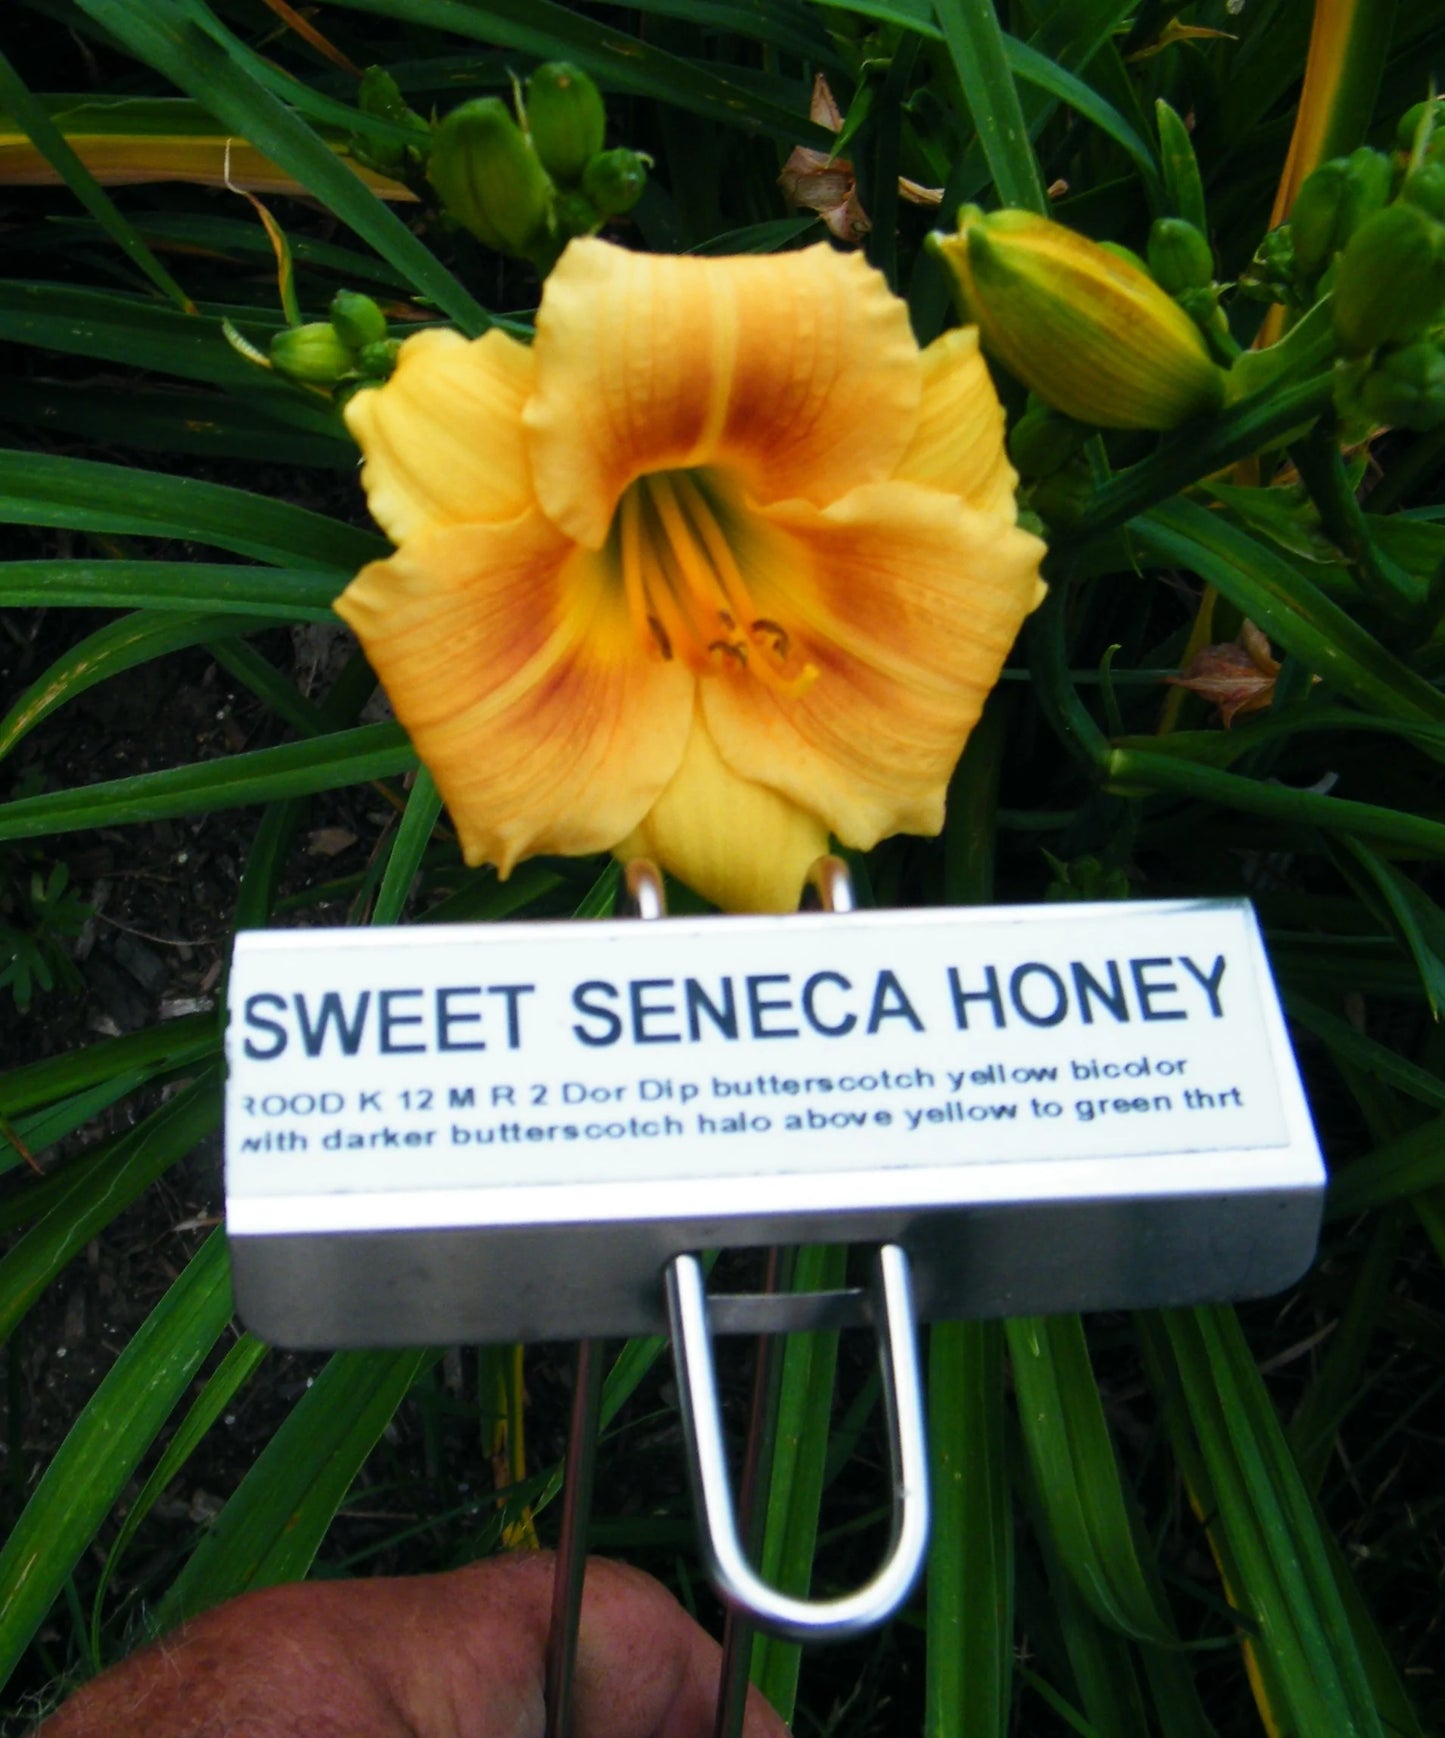 SWEET SENECA HONEY